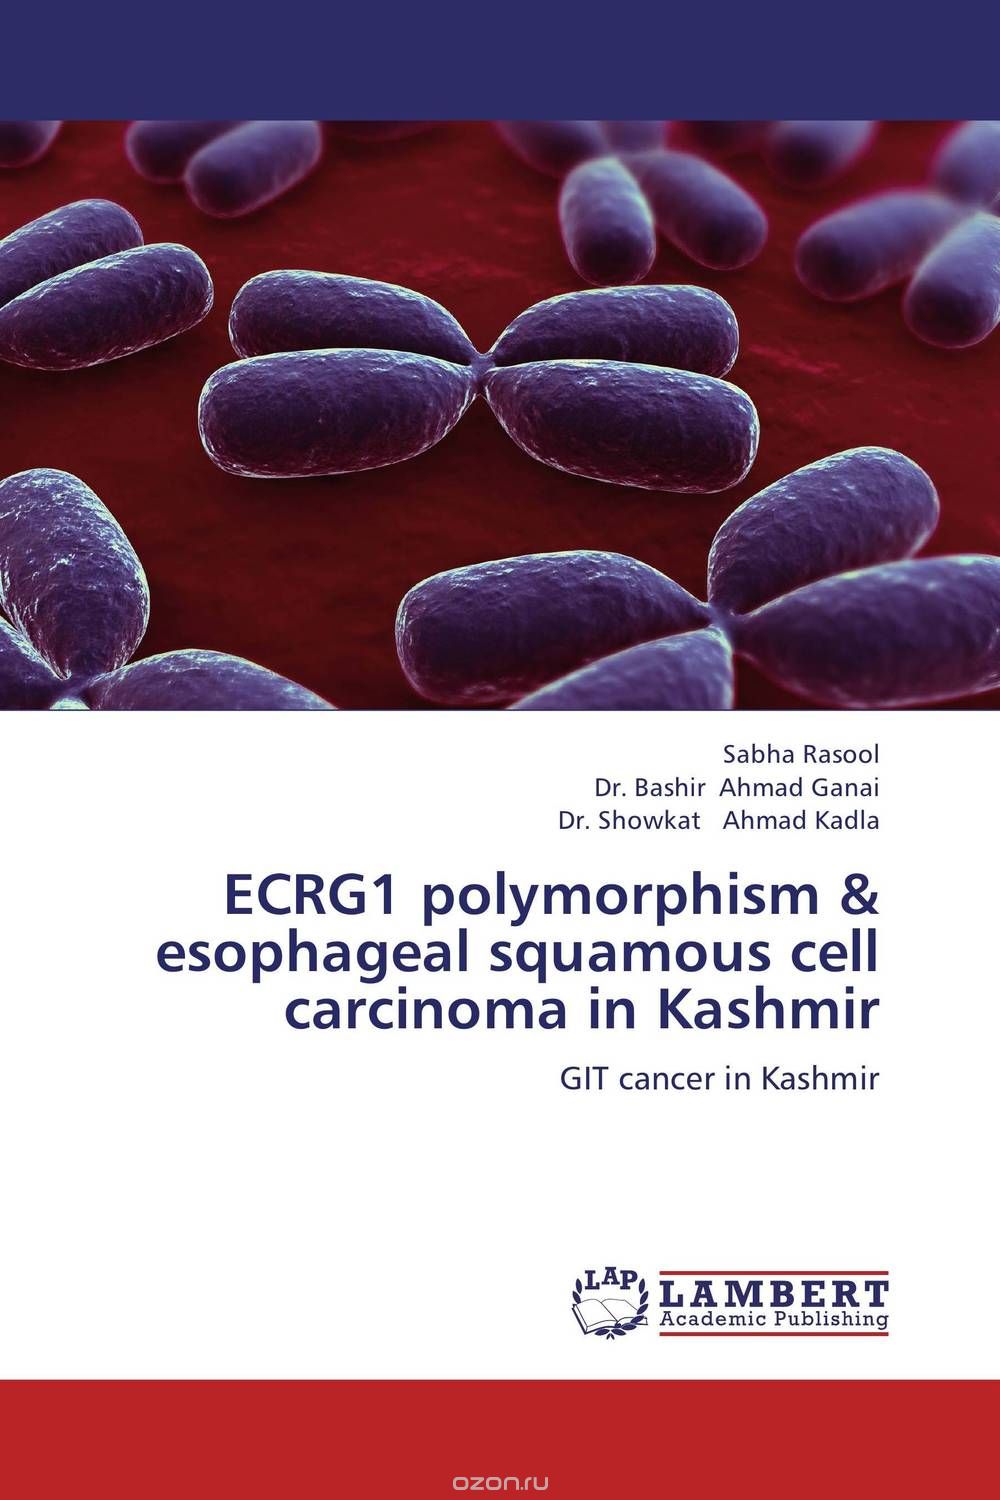 Скачать книгу "ECRG1 polymorphism & esophageal squamous cell carcinoma in Kashmir"